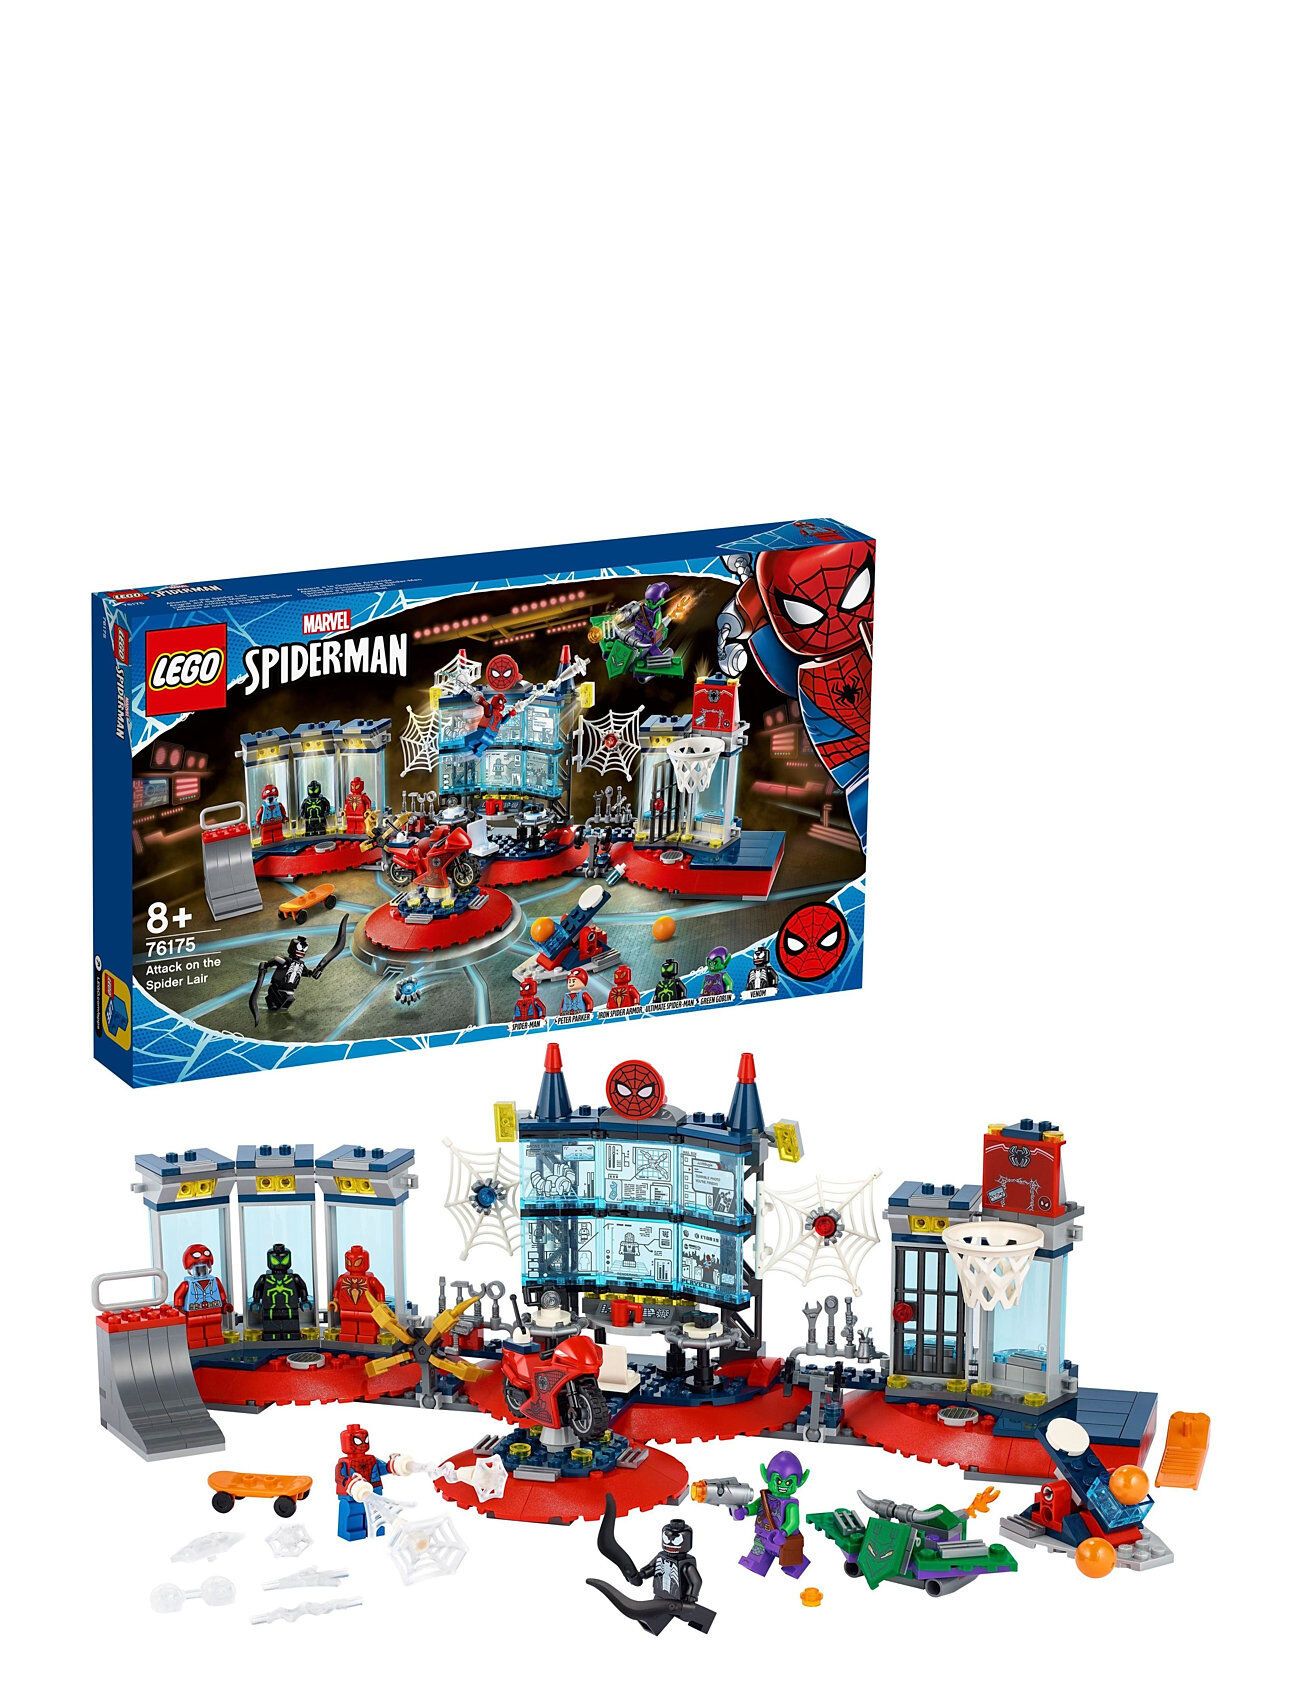 Lego Spider-Man Attack On The Spider Lair Set Toys LEGO Toys LEGO Super Heroes Multi/mønstret LEGO